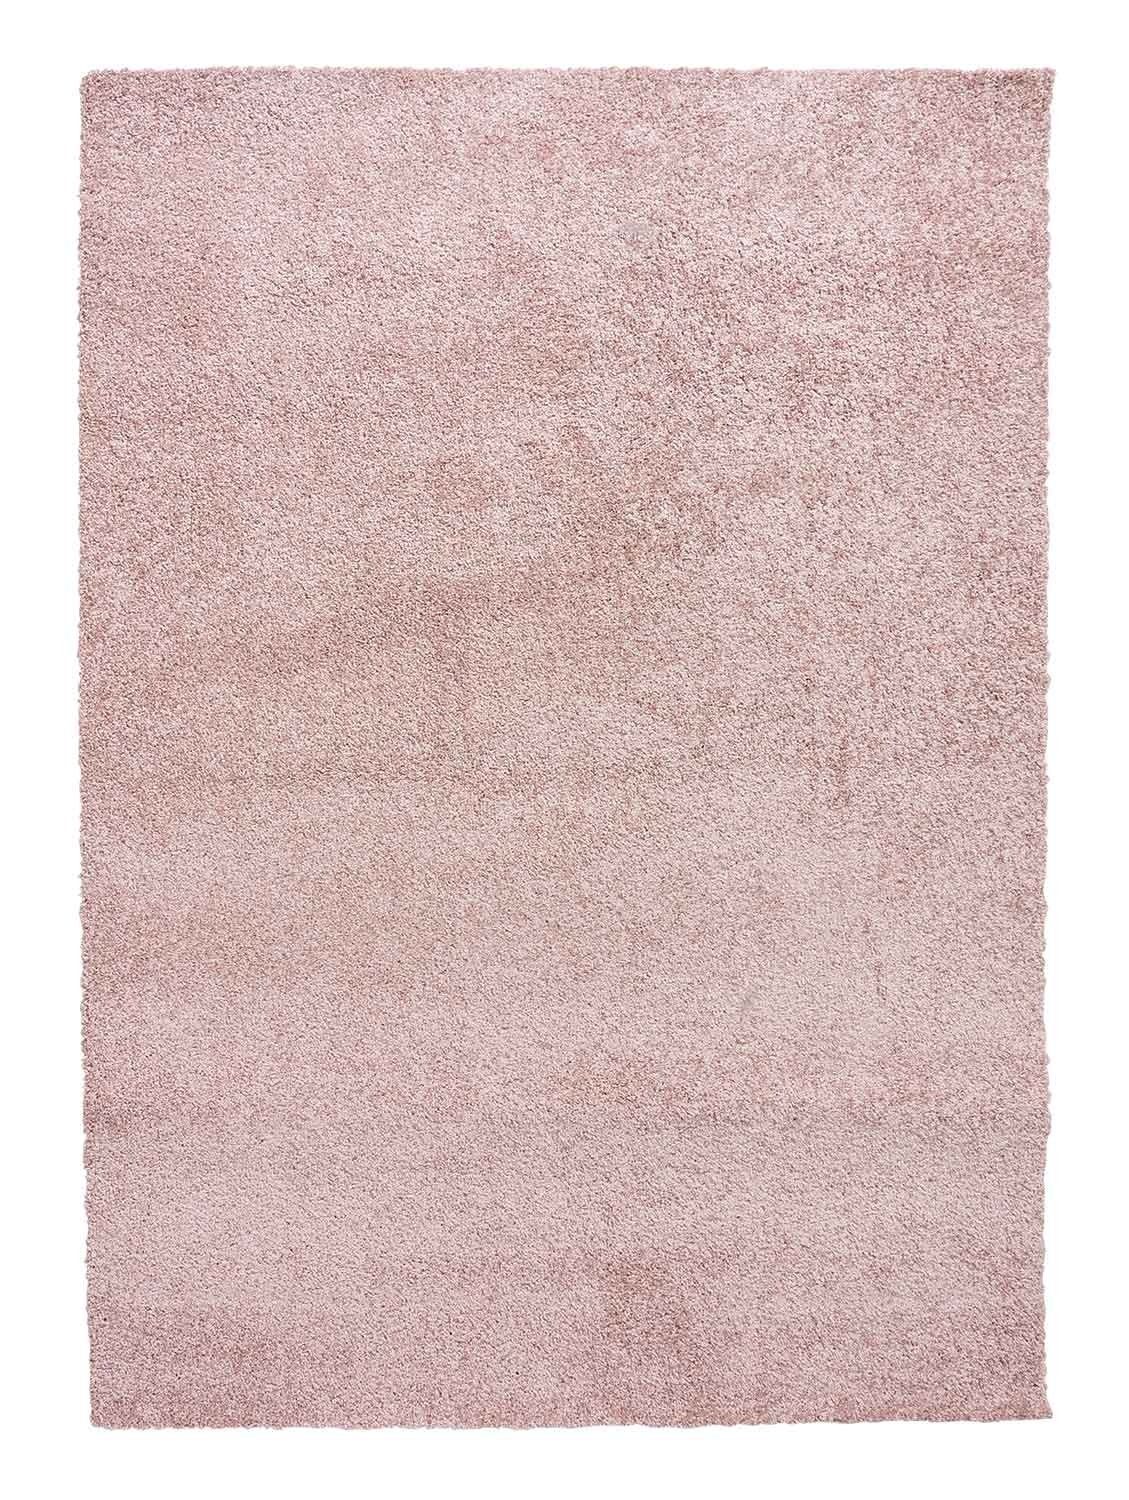 Teppich Teppich, Rosa, B 120 cm, L 170 cm, rechteckig, Höhe: 12 mm